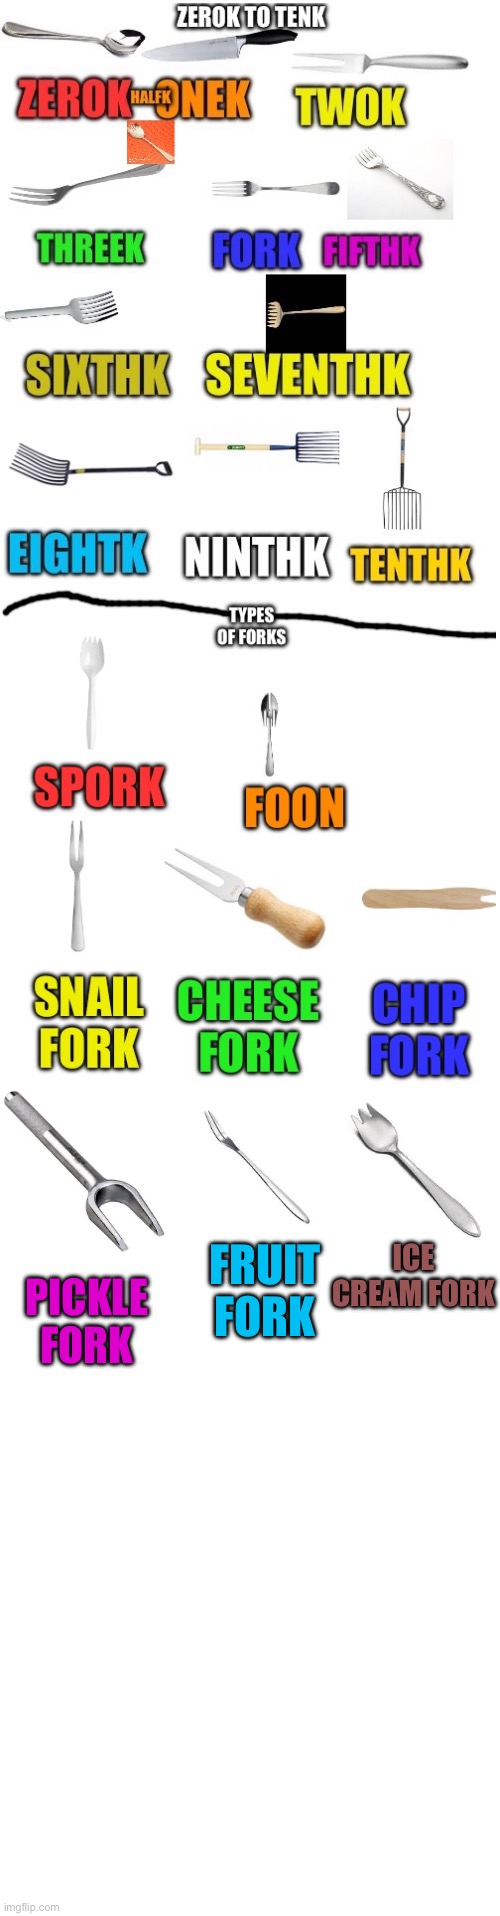 New Forks | ICE CREAM FORK; FRUIT FORK; PICKLE FORK | image tagged in onek - tenk | made w/ Imgflip meme maker